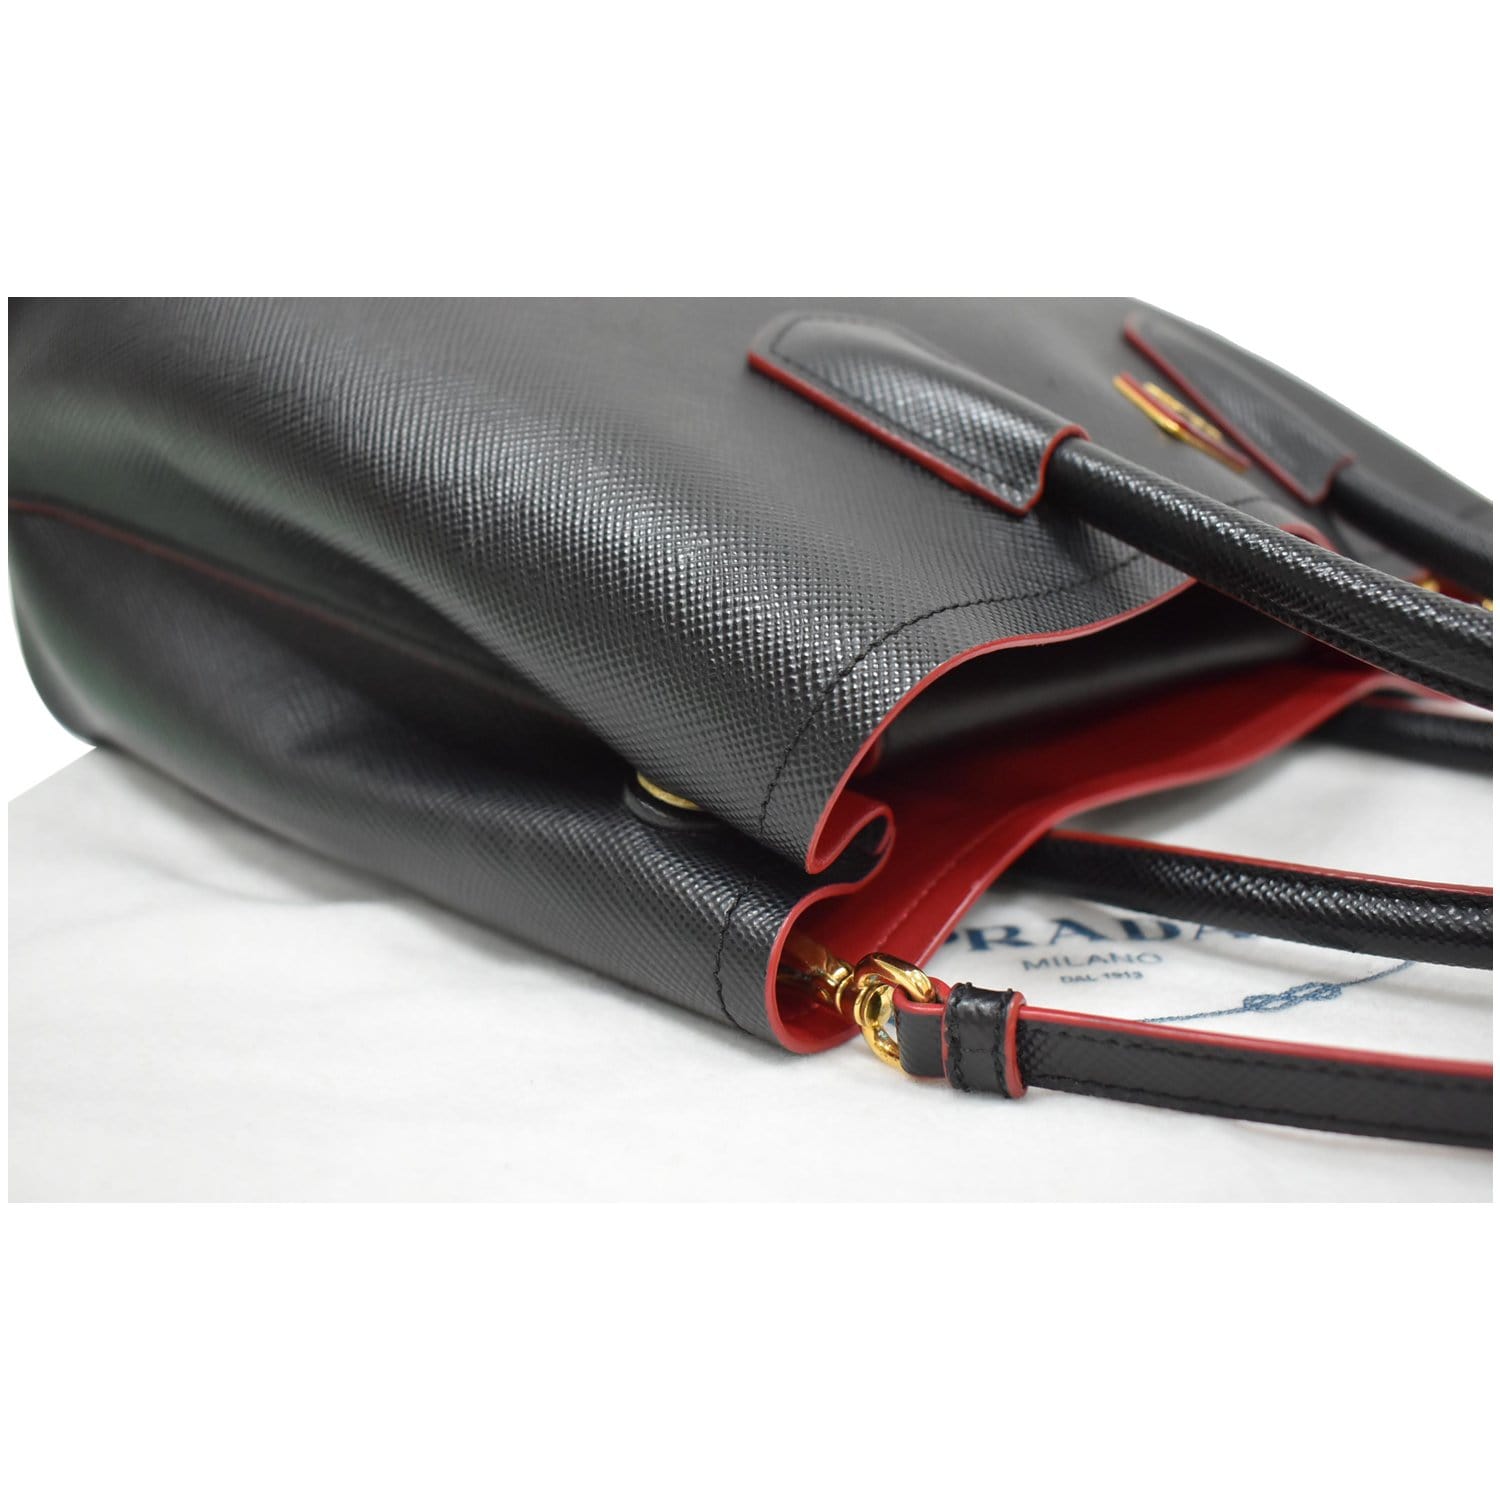 Prada, Bags, Prada Large Saffiano Leather Double Prada Bag Blackfiery Red